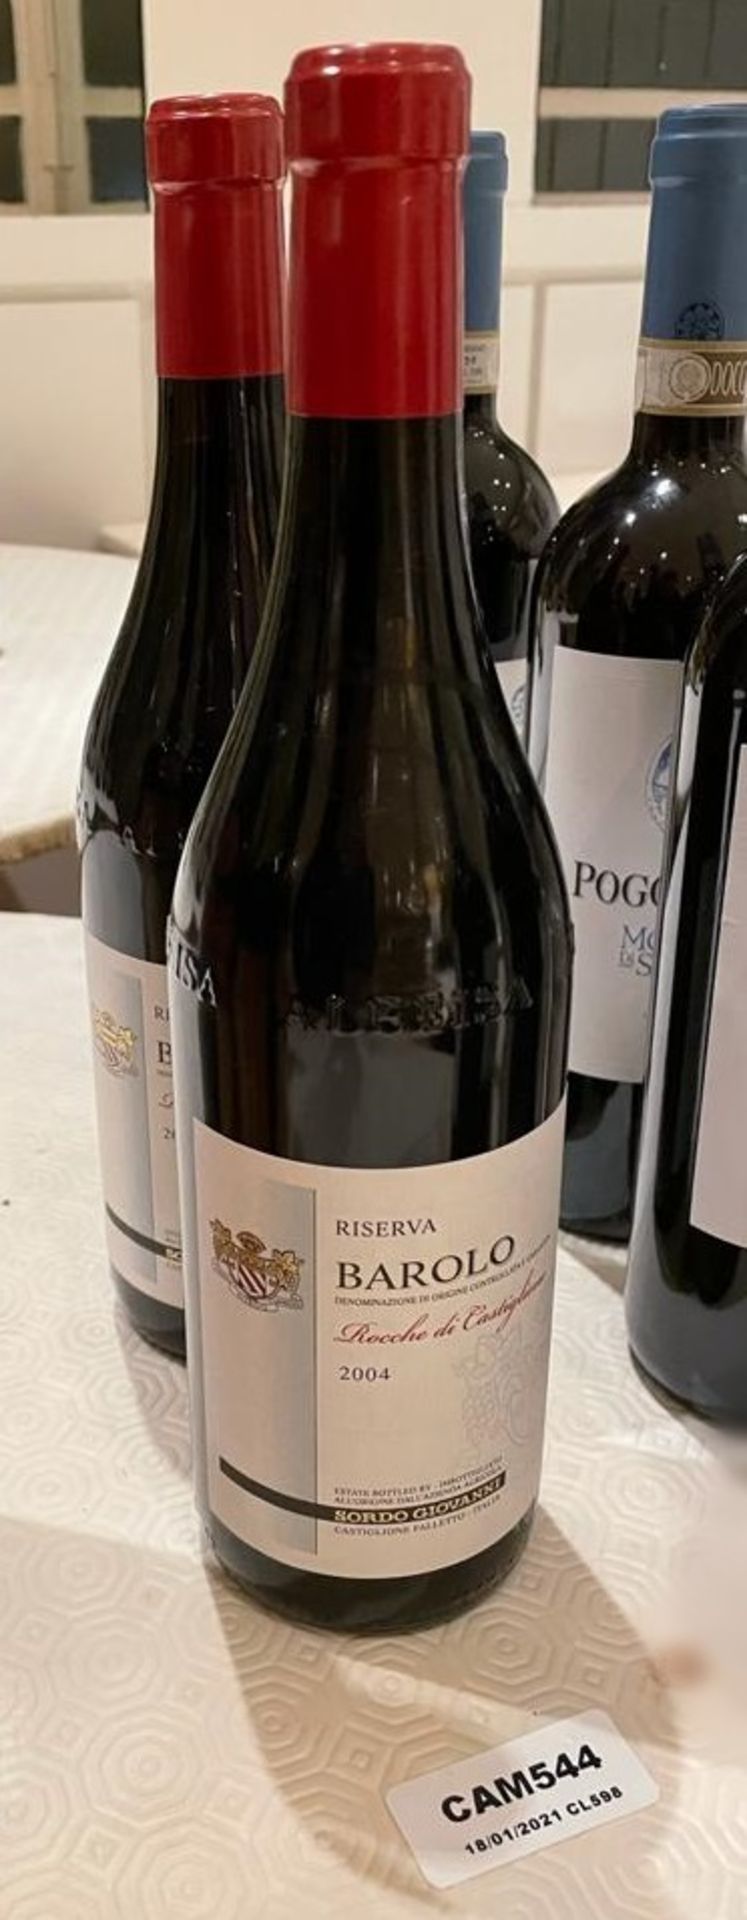 2 x Bottles Of SORDO BAROLO - 2004 - 75cl - New/Unopened Restaurant Stock - Ref: CAM544 - Image 2 of 3